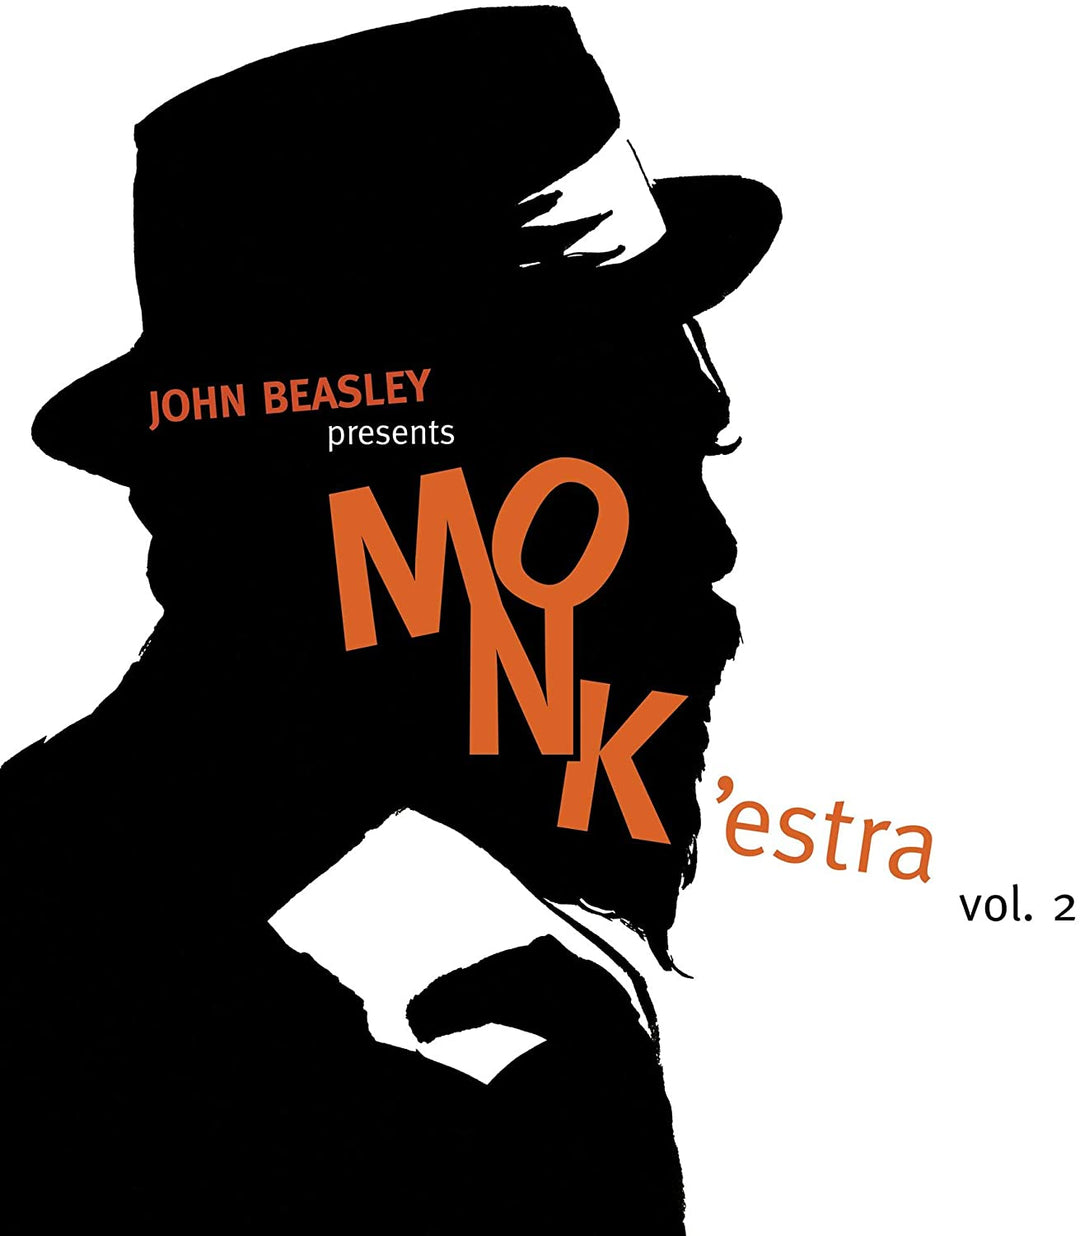 MONK'estra Vol. 2 - John Beasley [Audio-CD]